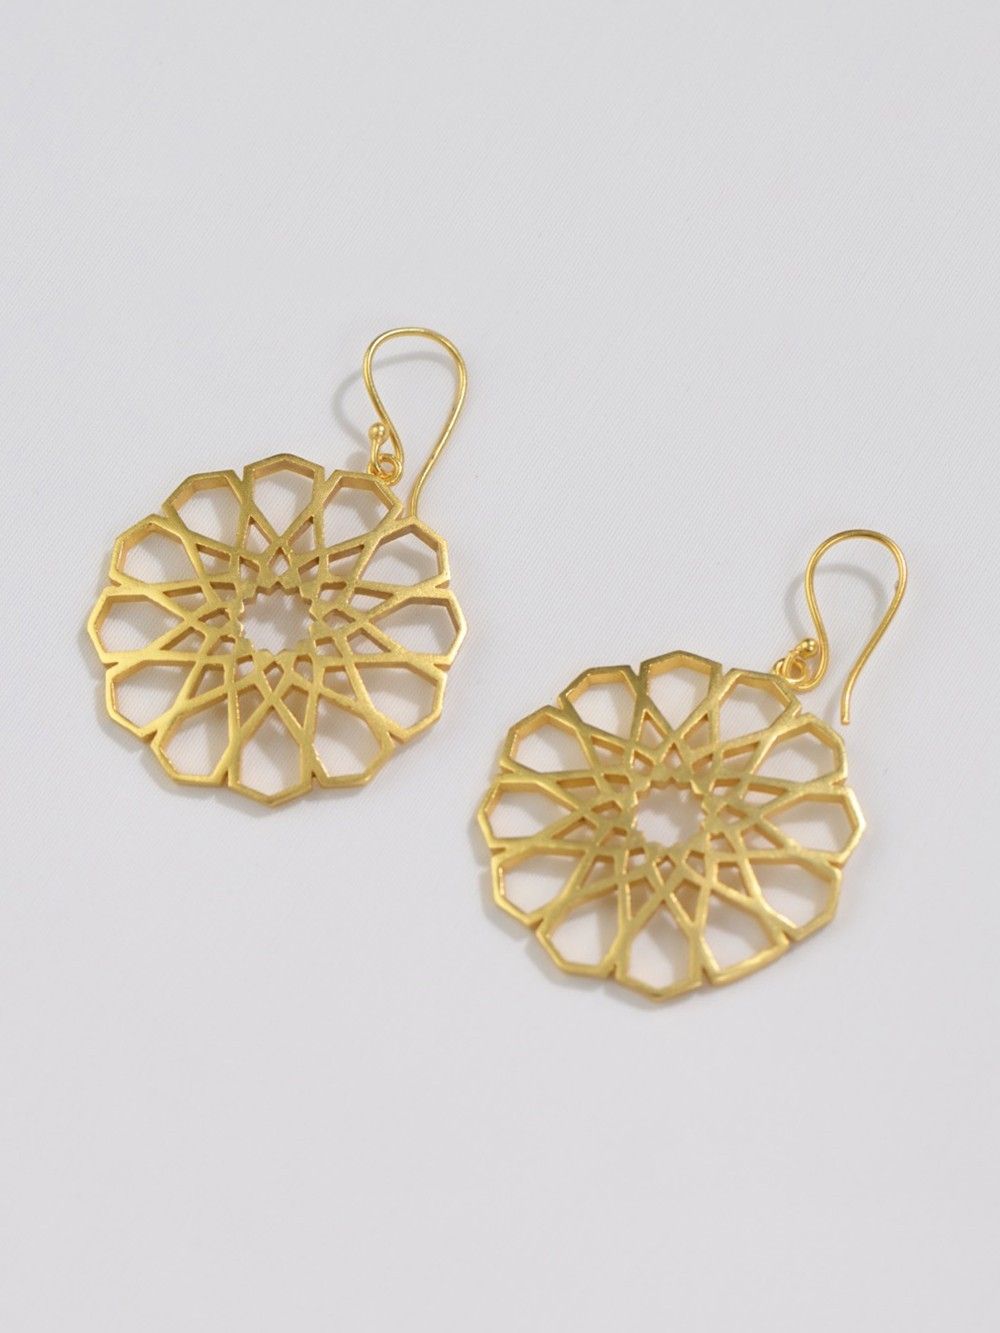 Buy Gold Plated Handcrafted Brass Flower Earrings | KV_Jhrcr_Earring ...